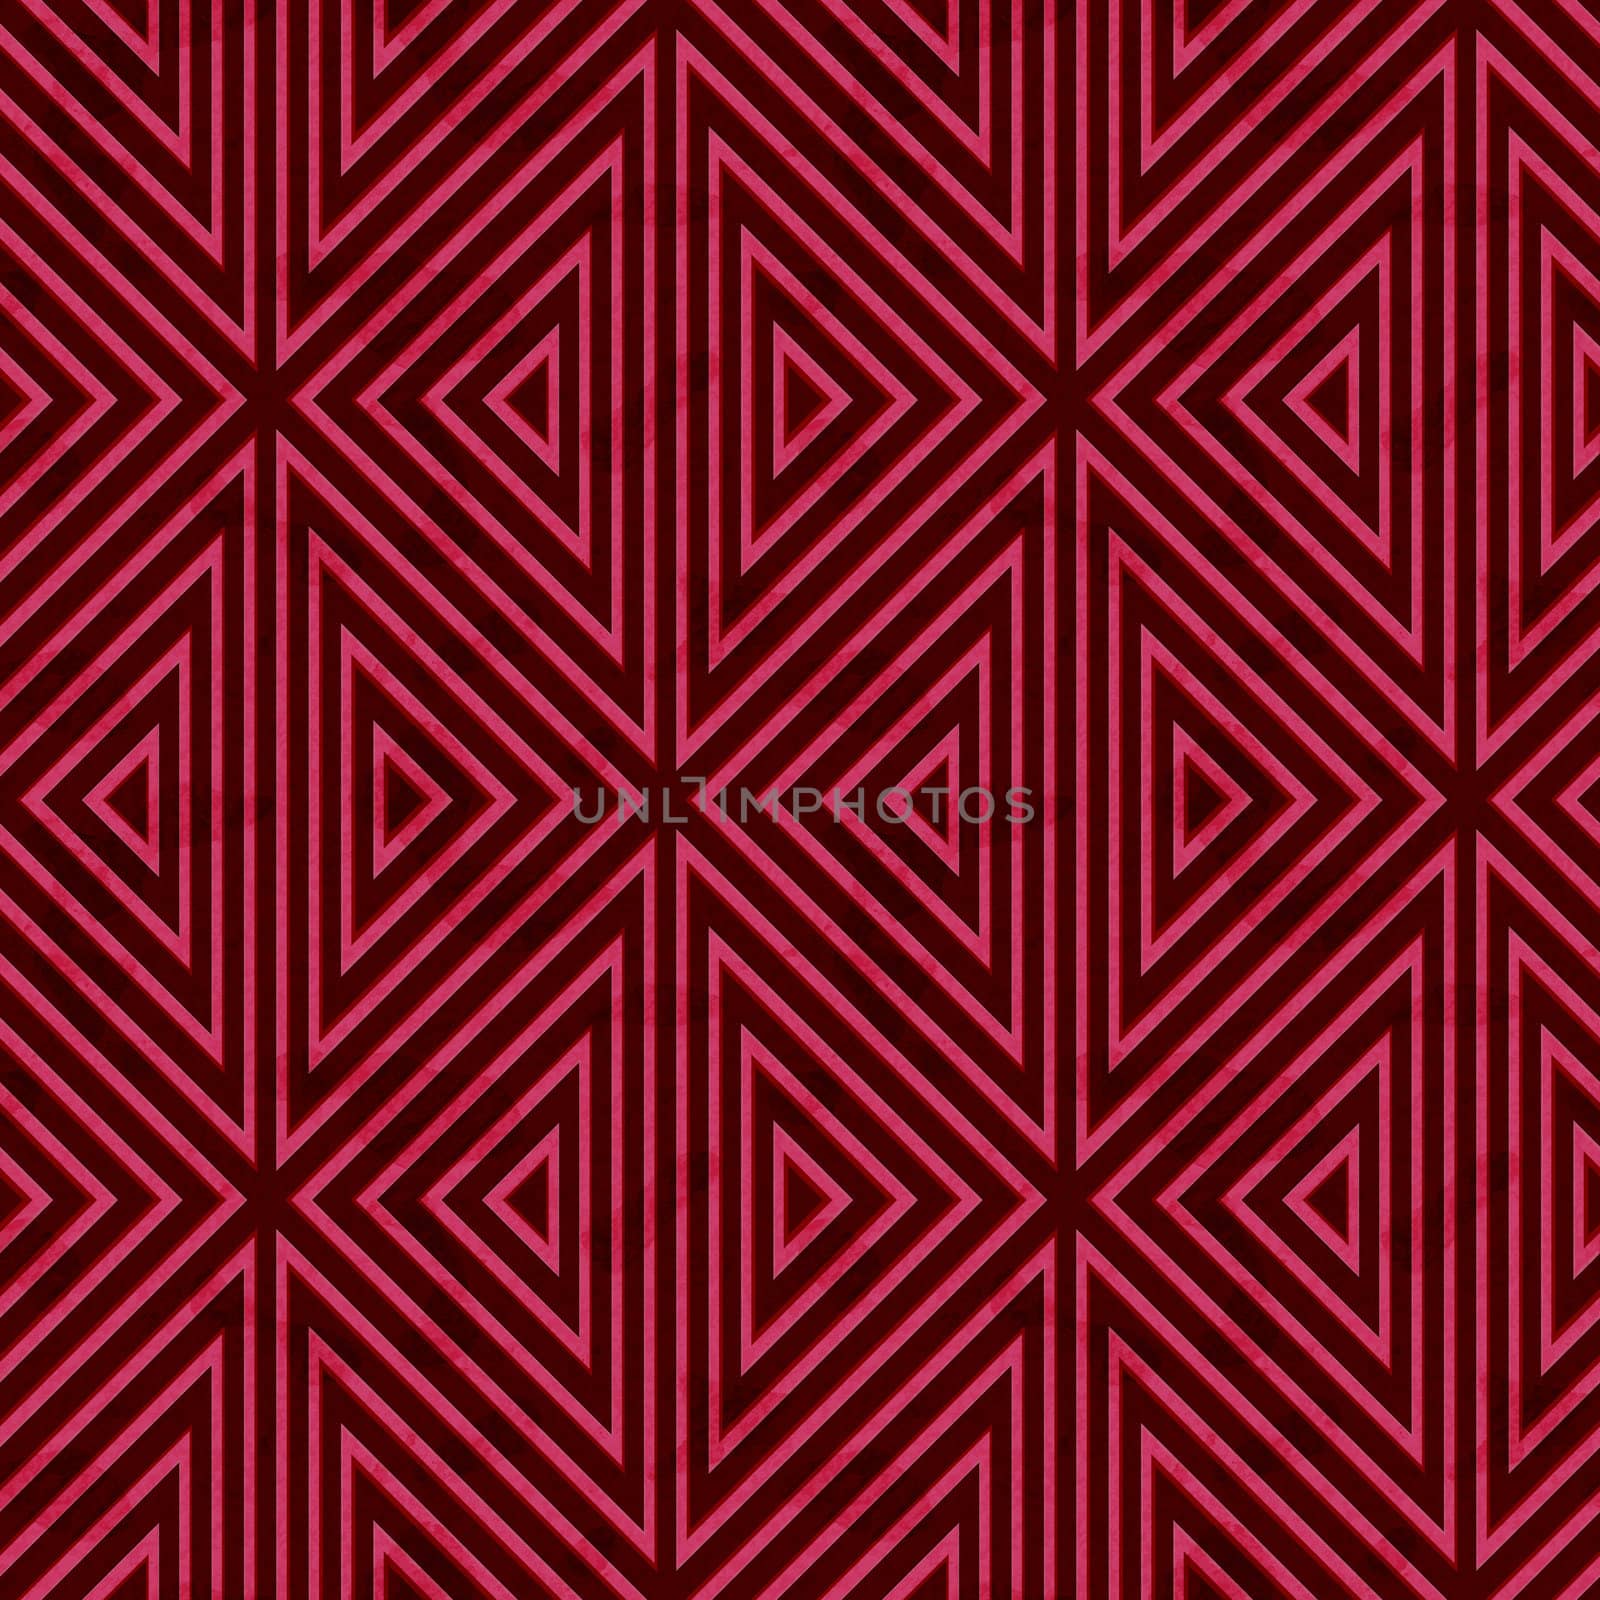 Geometric Seamless Pattern by bmelo